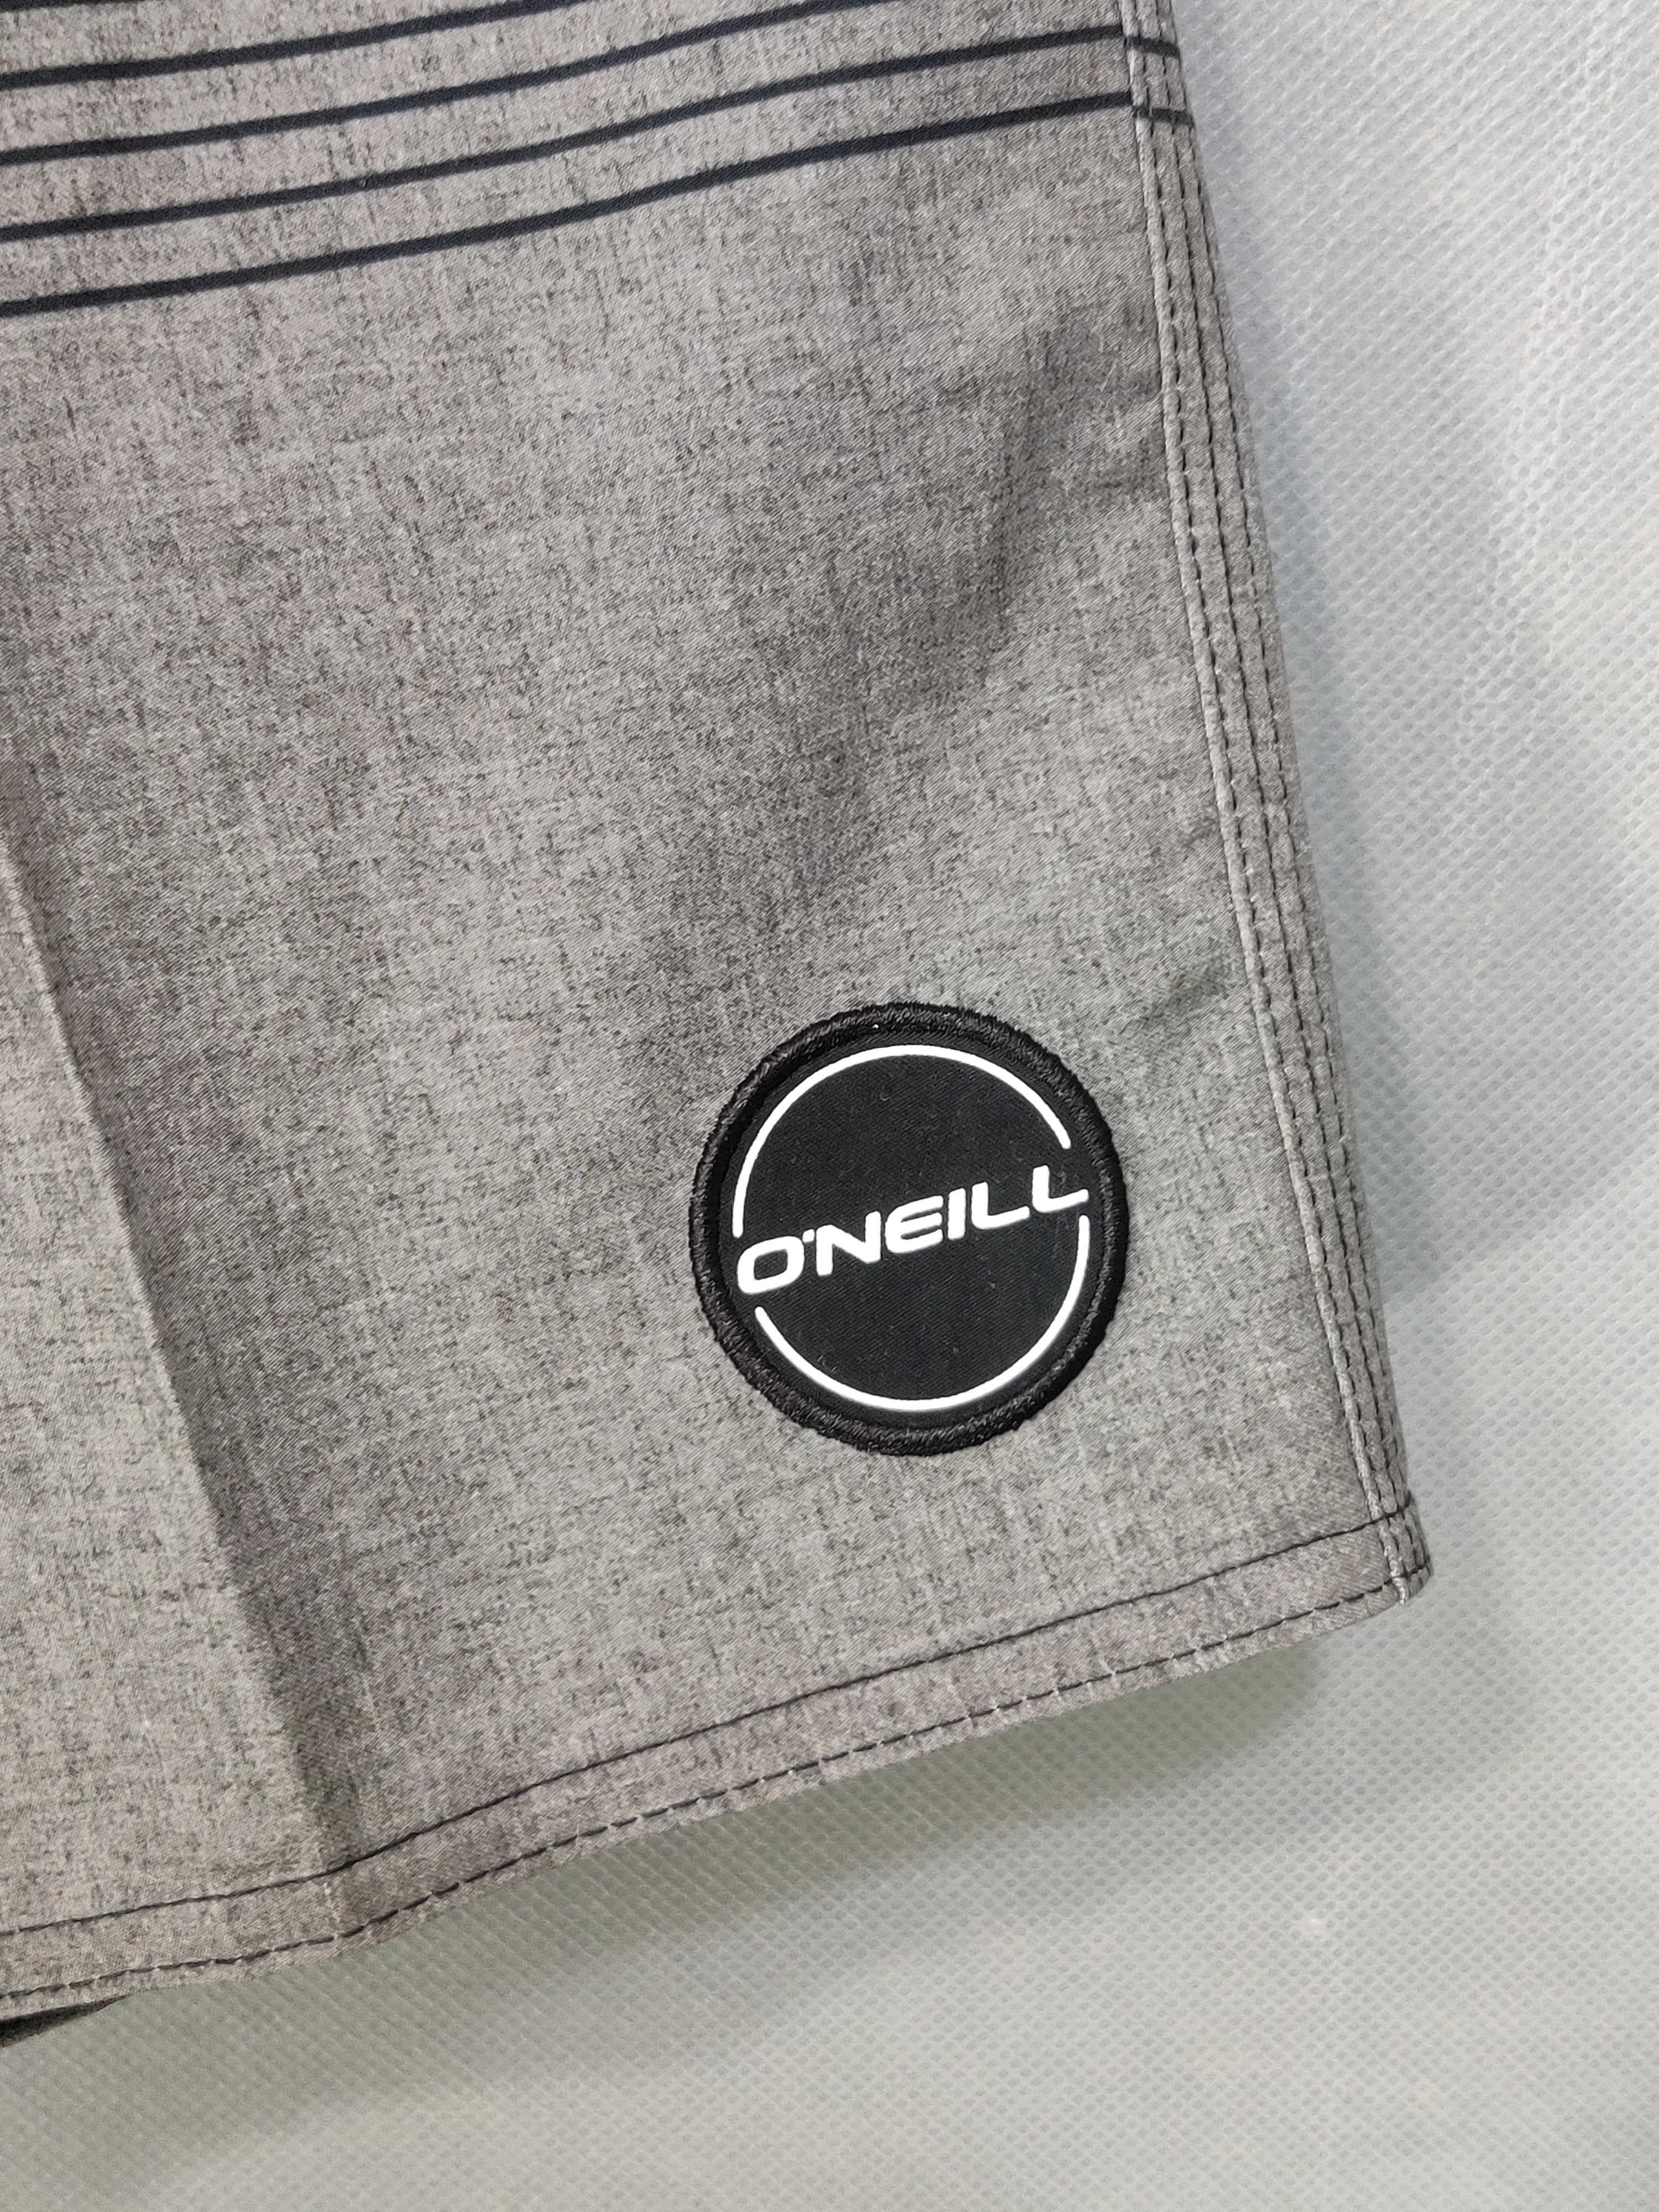 Oneill Branded Original Cotton Short For Men